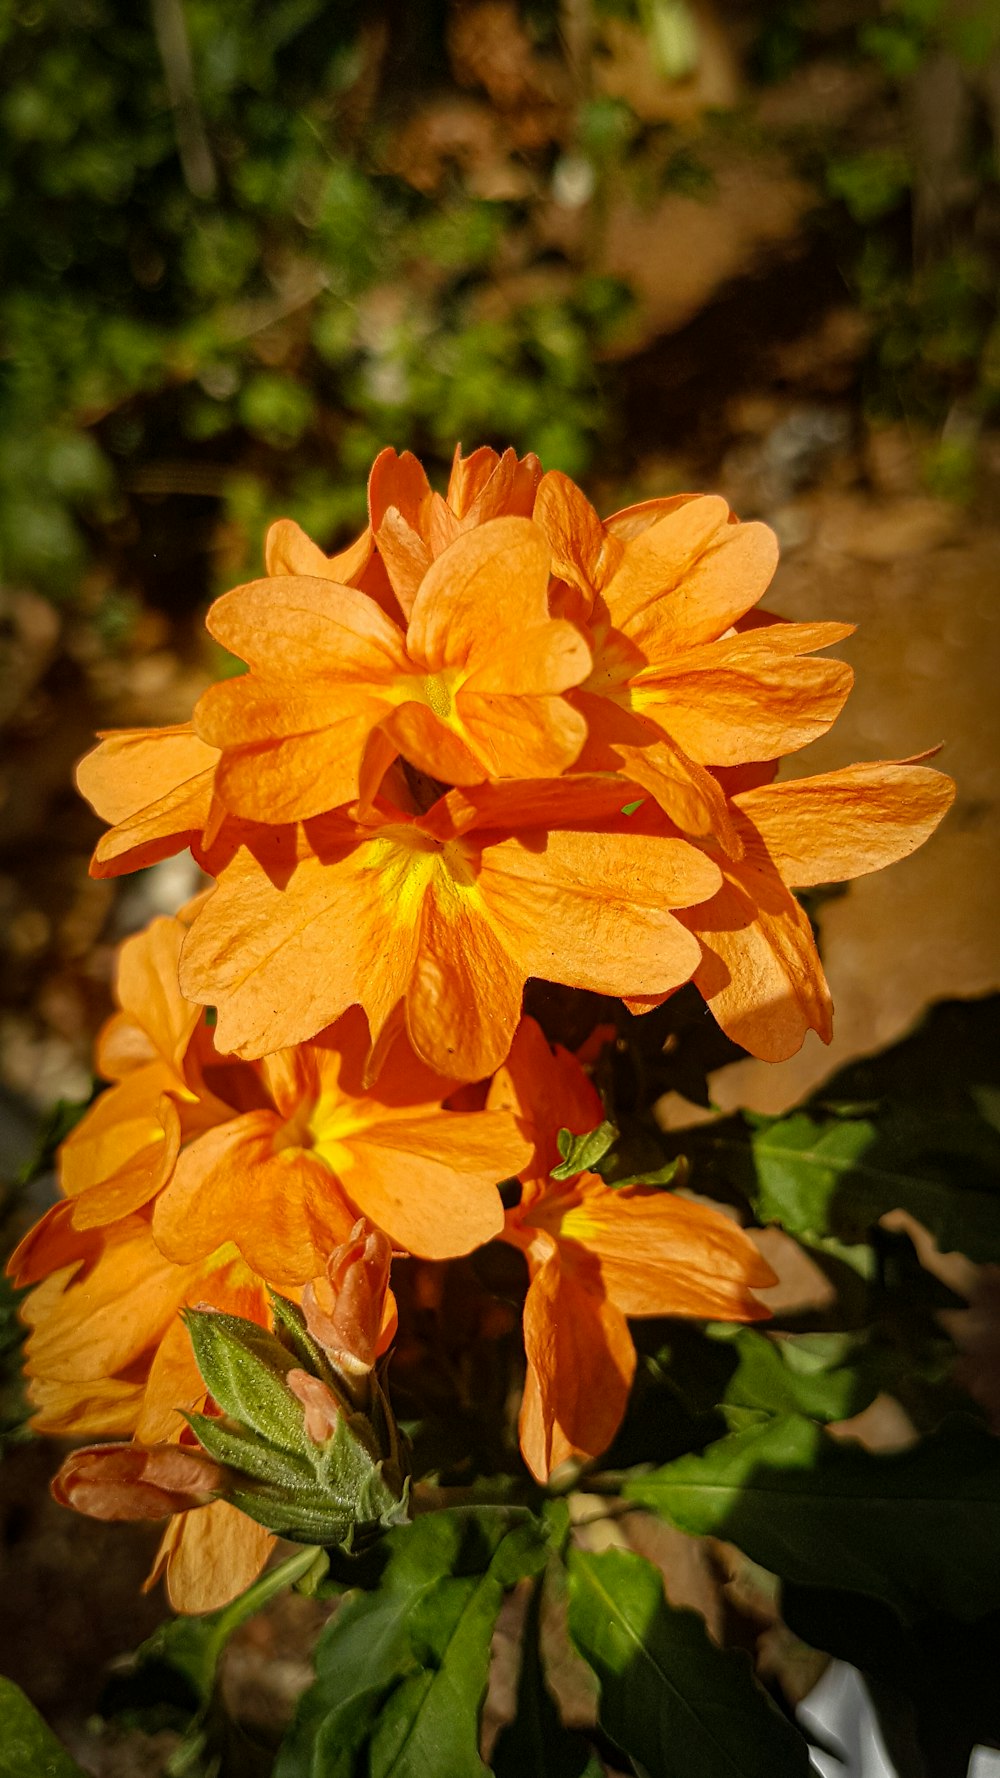 a close up of an orange flower in a garden